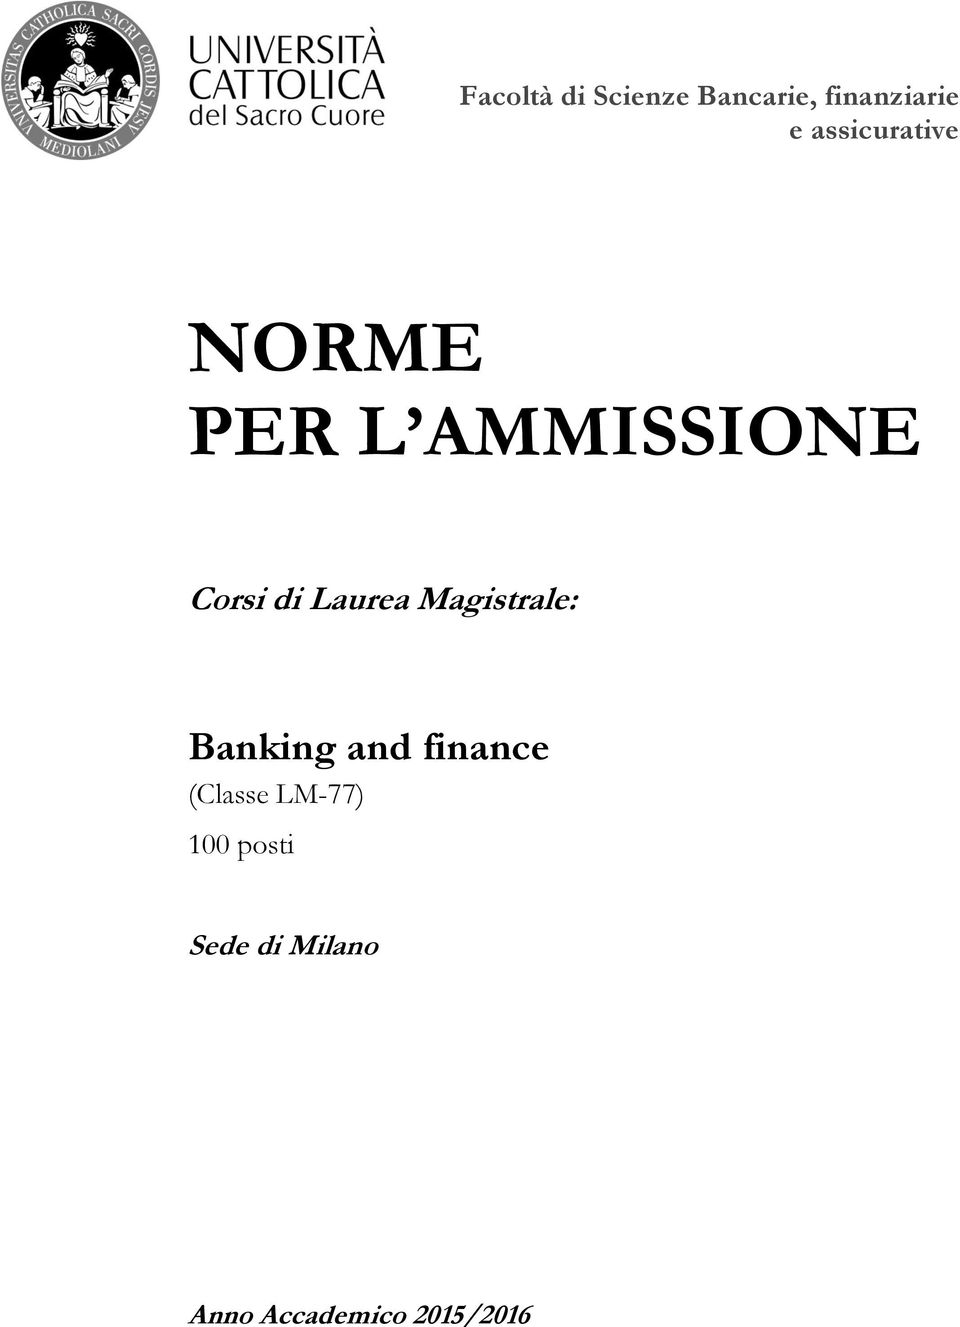 Laurea Magistrale: Banking and finance (Classe